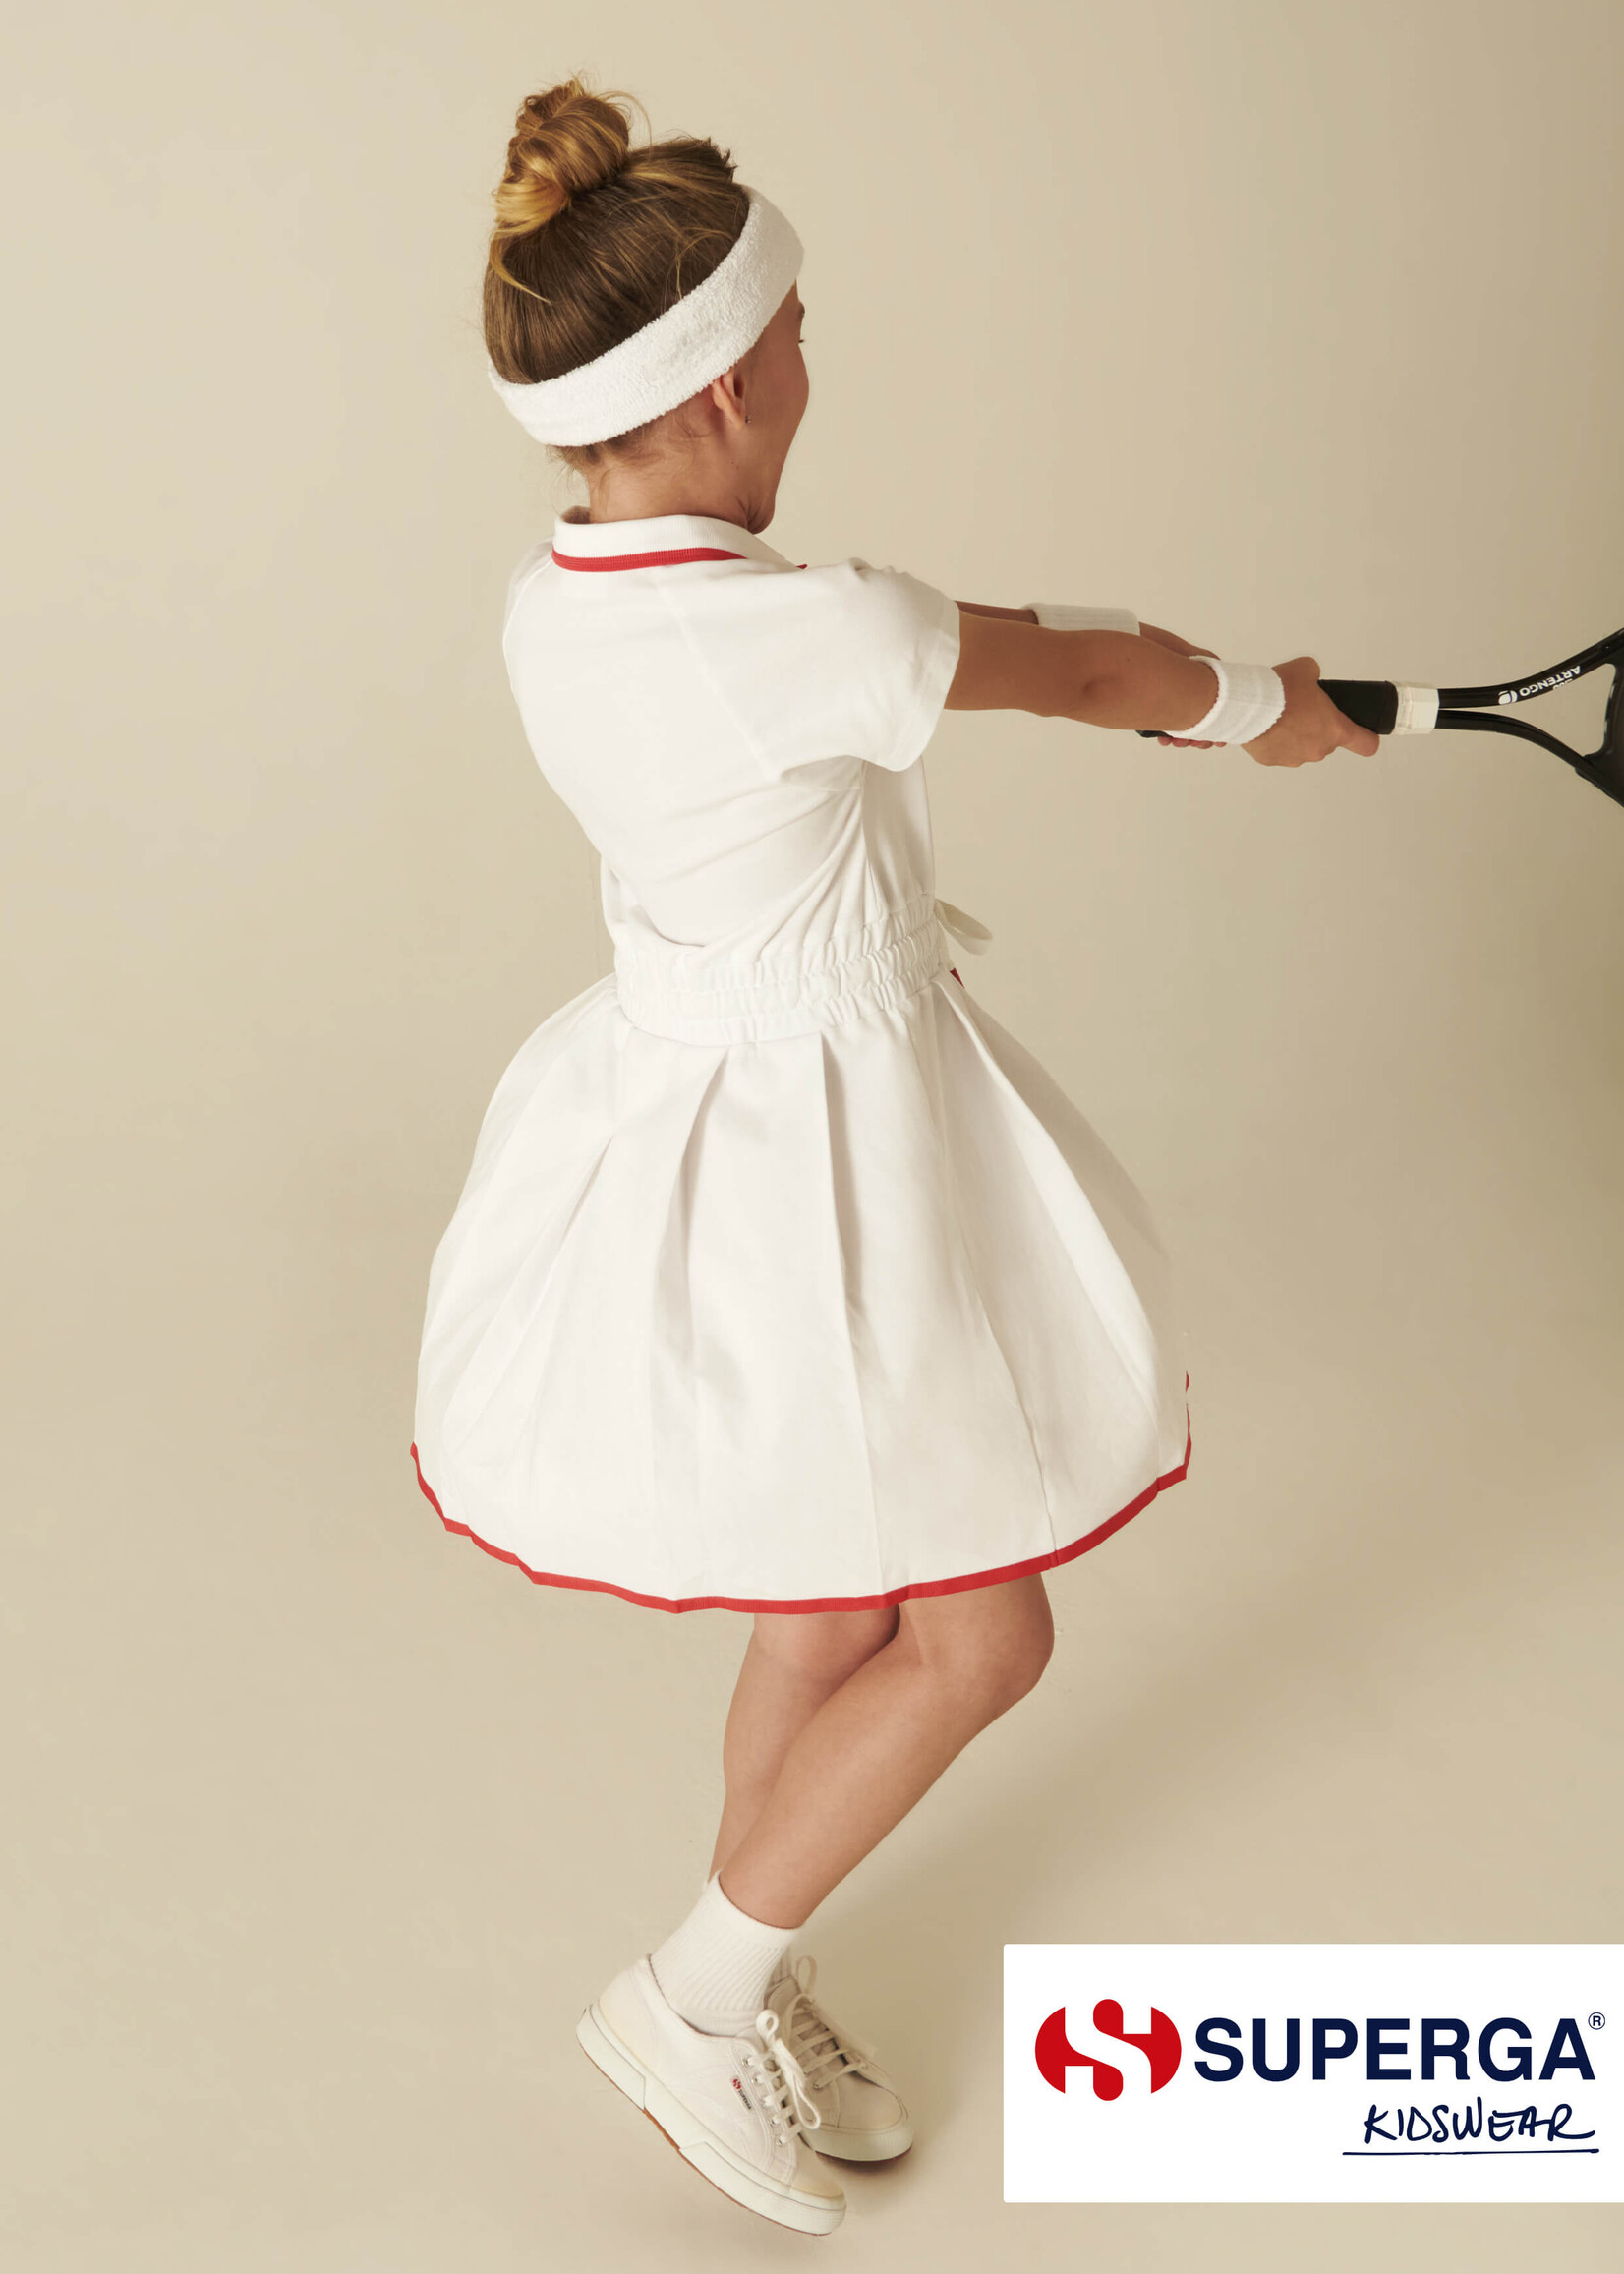 Superga Tennis Dress